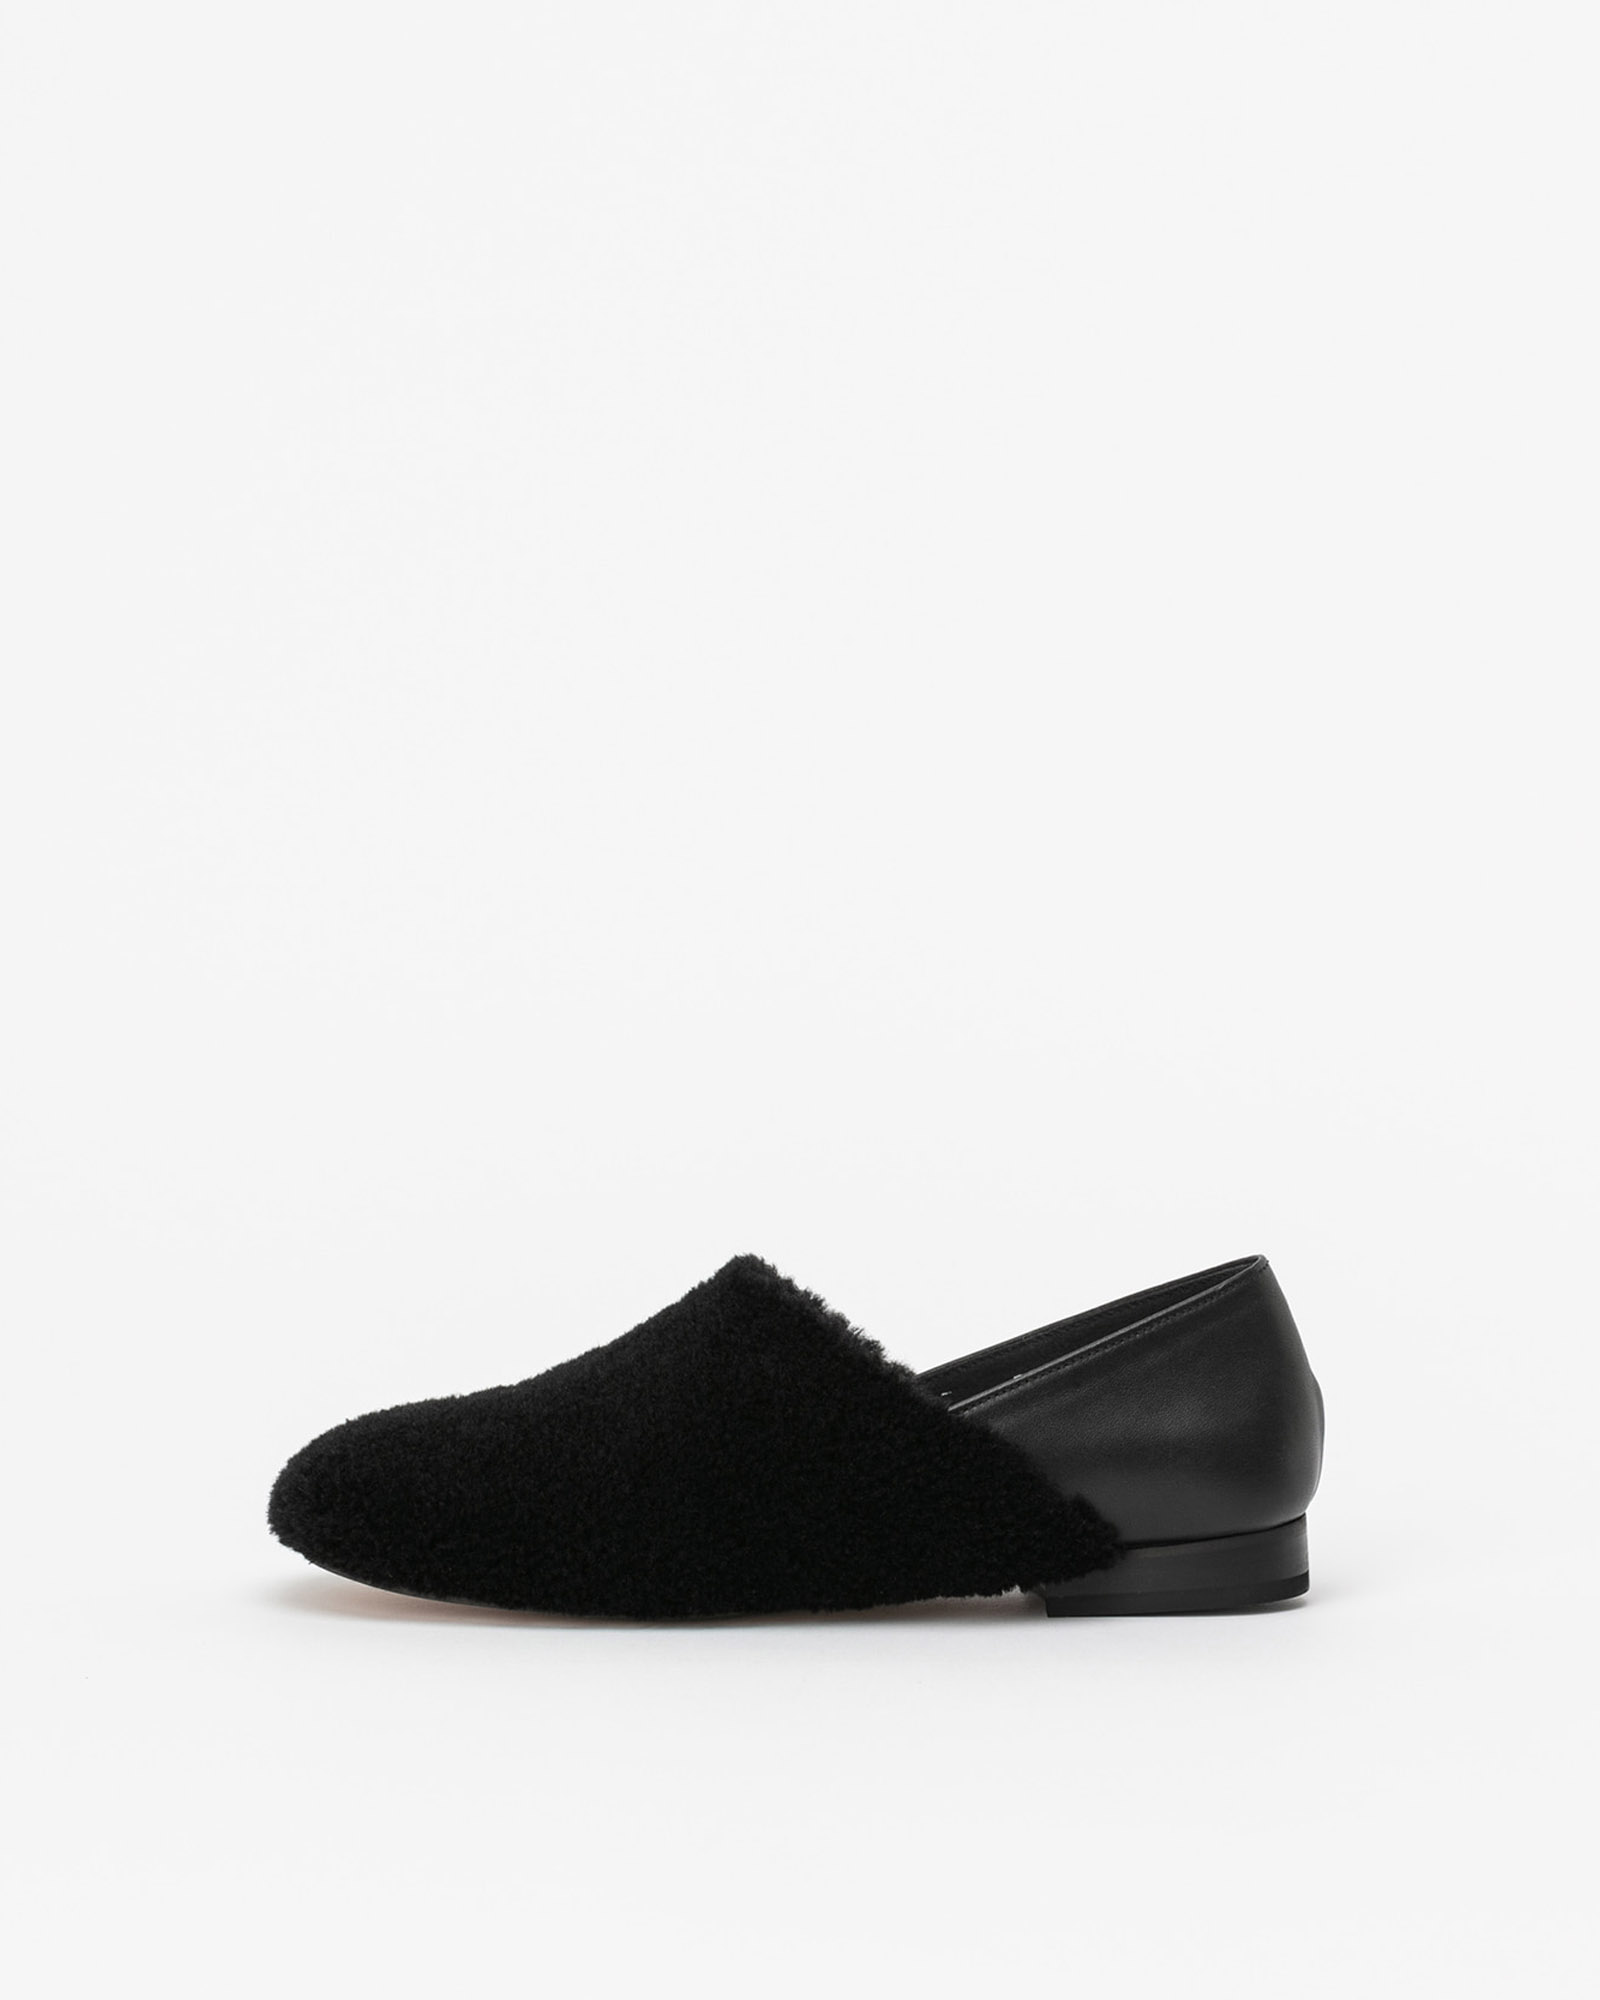 Mina Shearling Fur Flat Shoes in Black